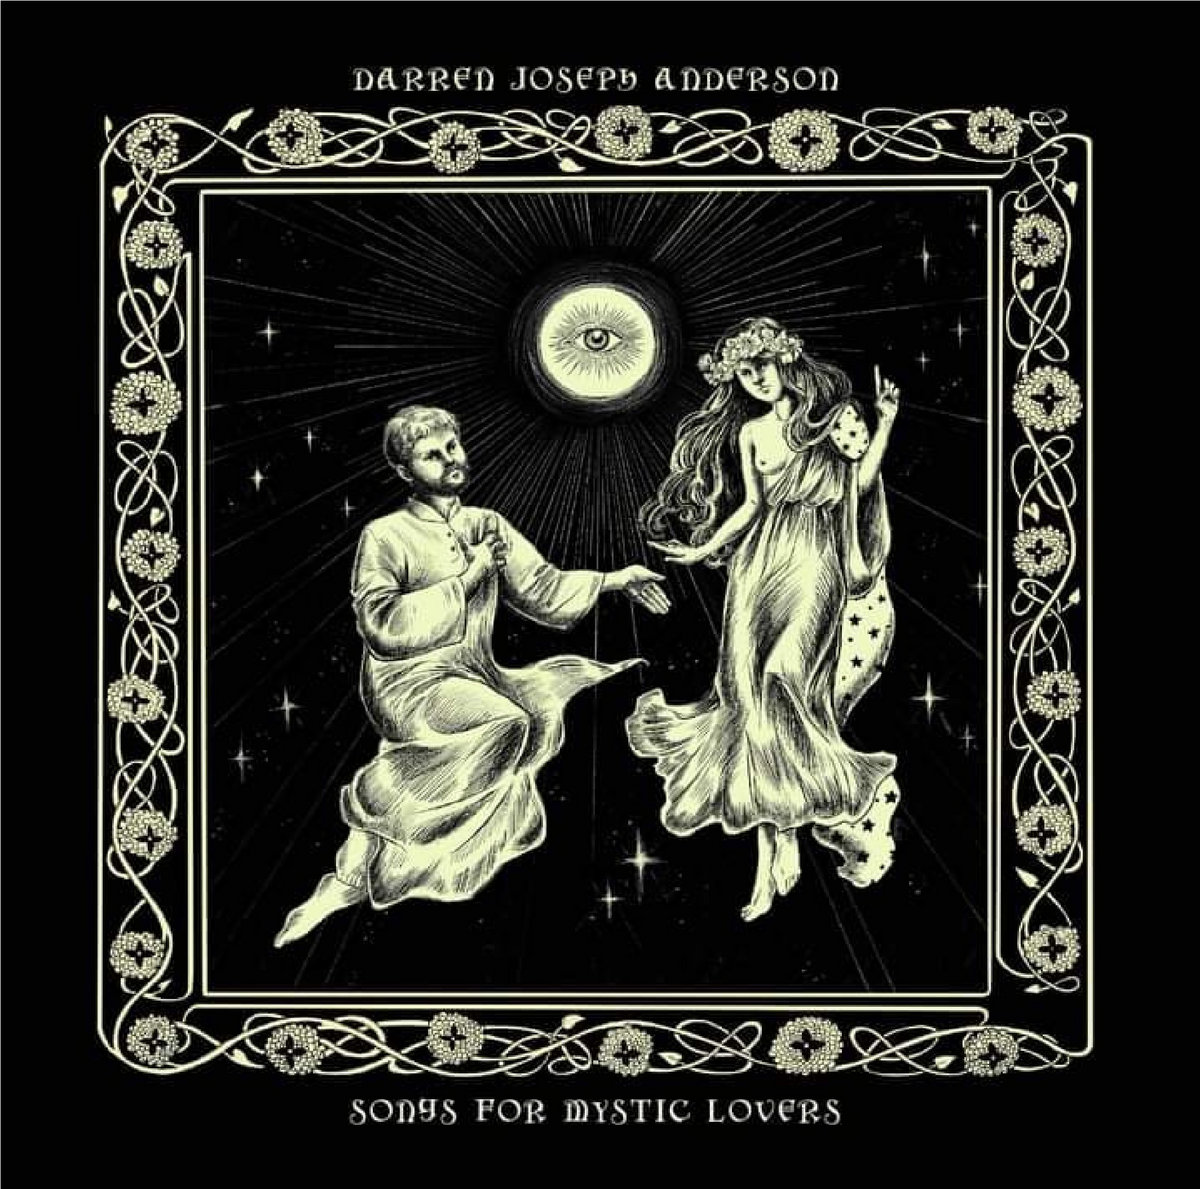 Darren Joseph Anderson "Songs for mystic lovers" LP